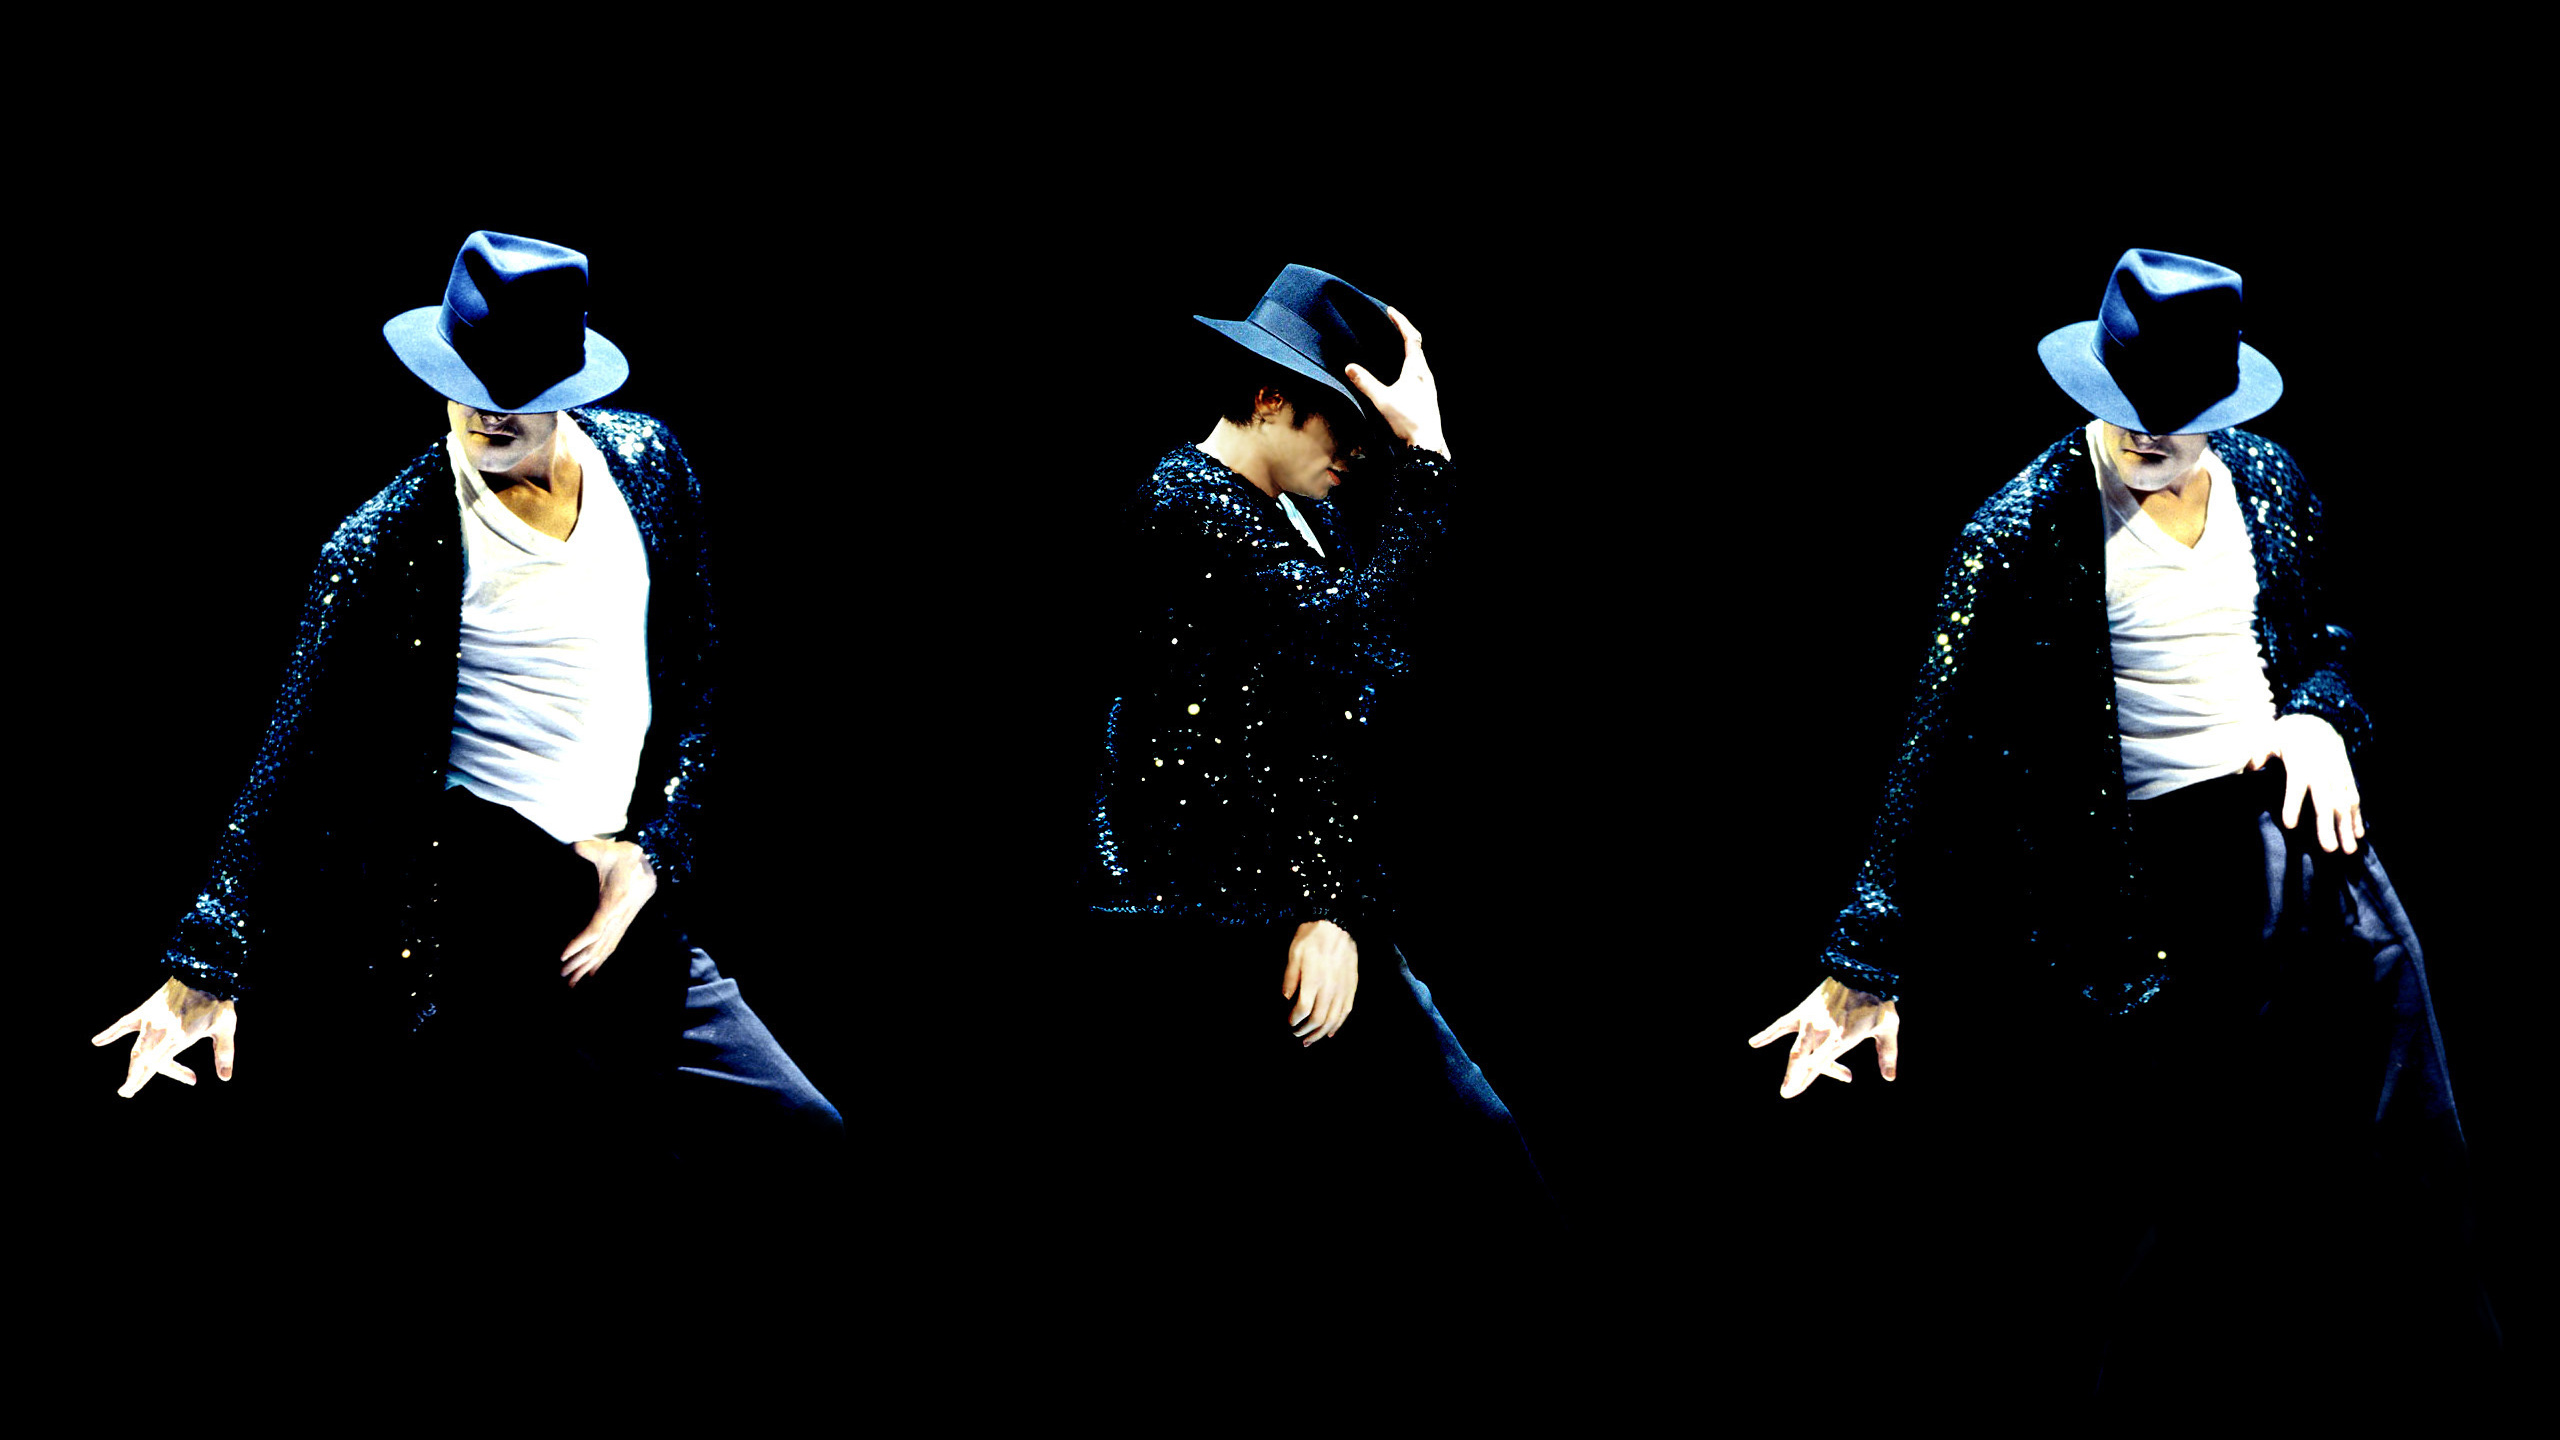 Michael Jackson Dance Wallpapers HD Wallpapers